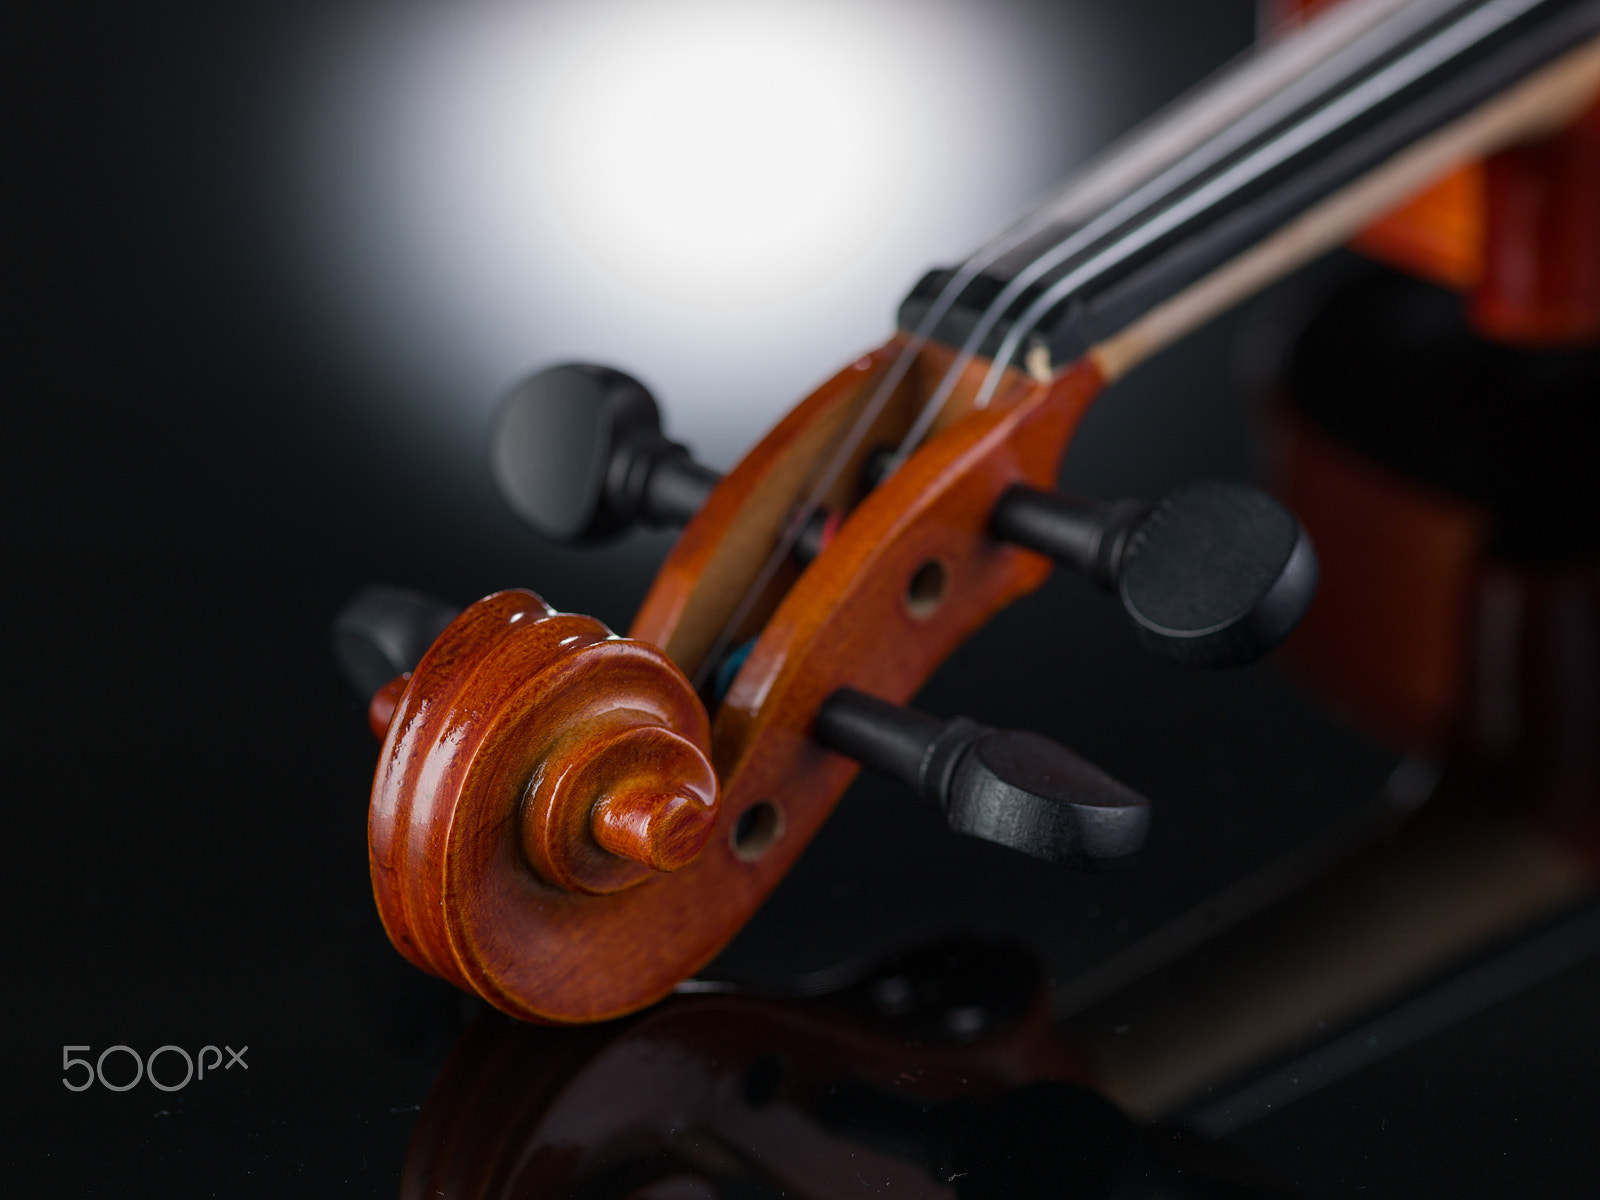 HC 120 sample photo. Violin photography